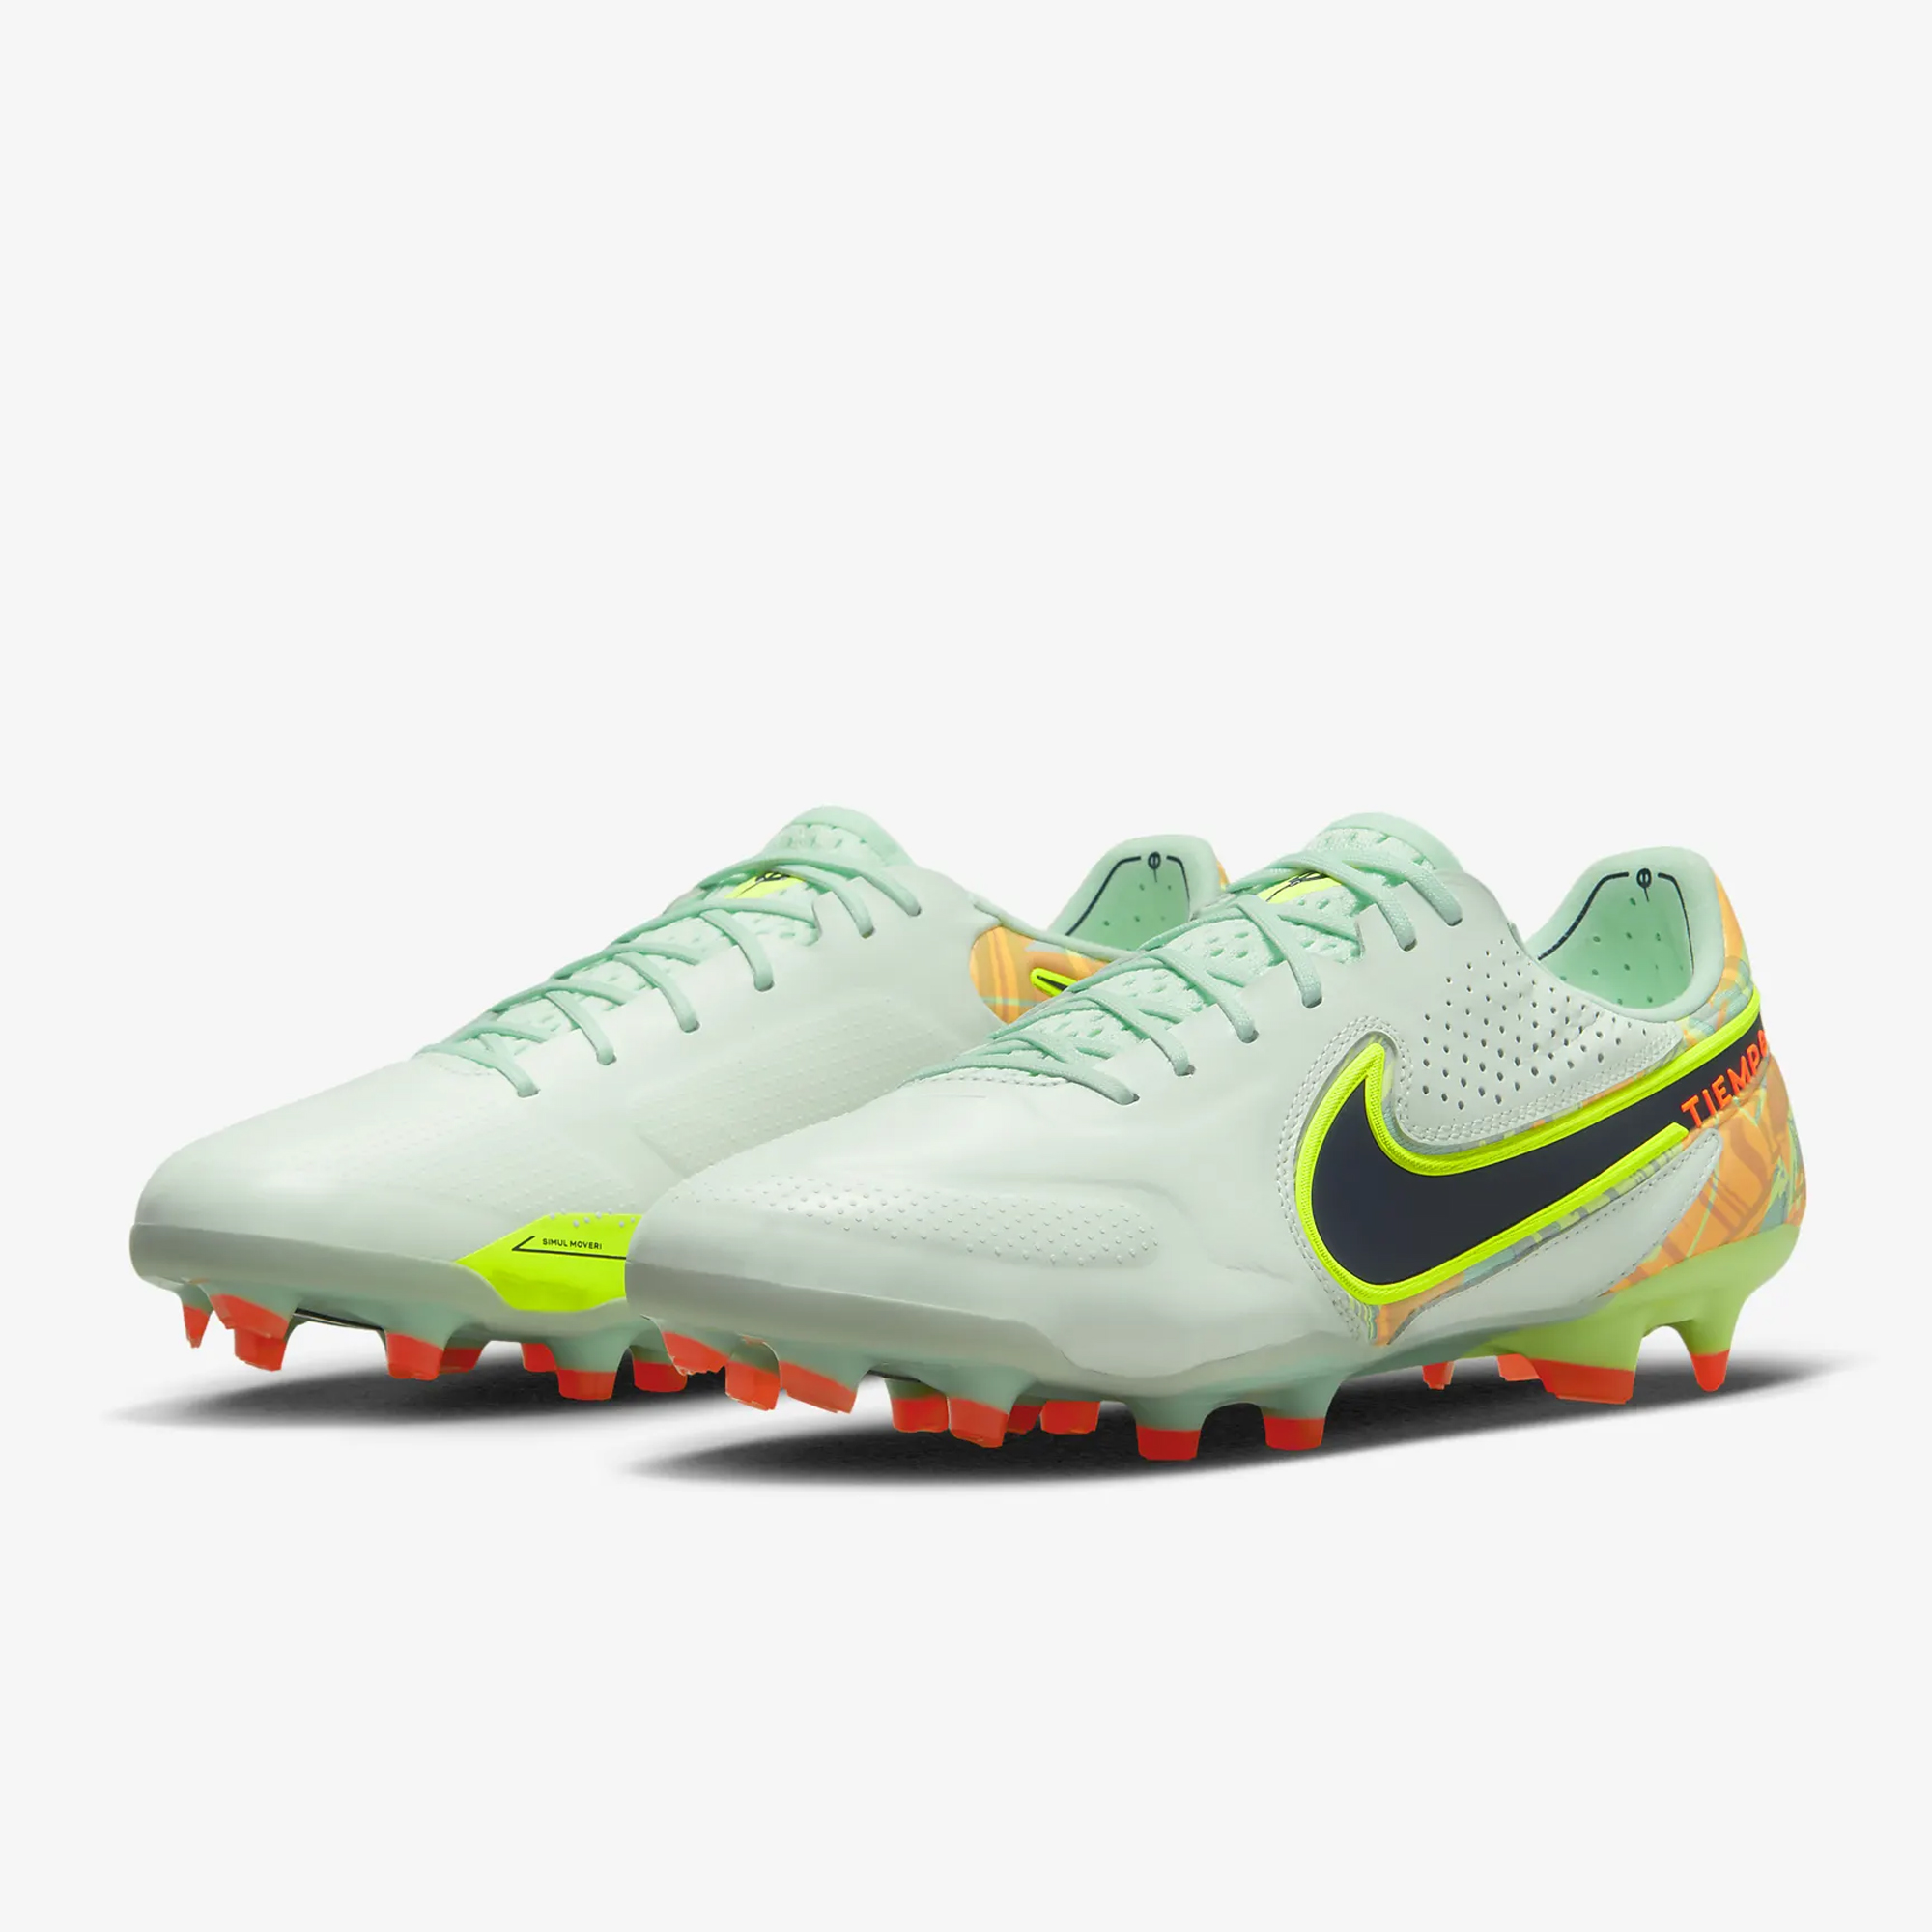 stefanssoccer.com:Nike Tiempo Legend Firm Ground Soccer Cleats - Light Green